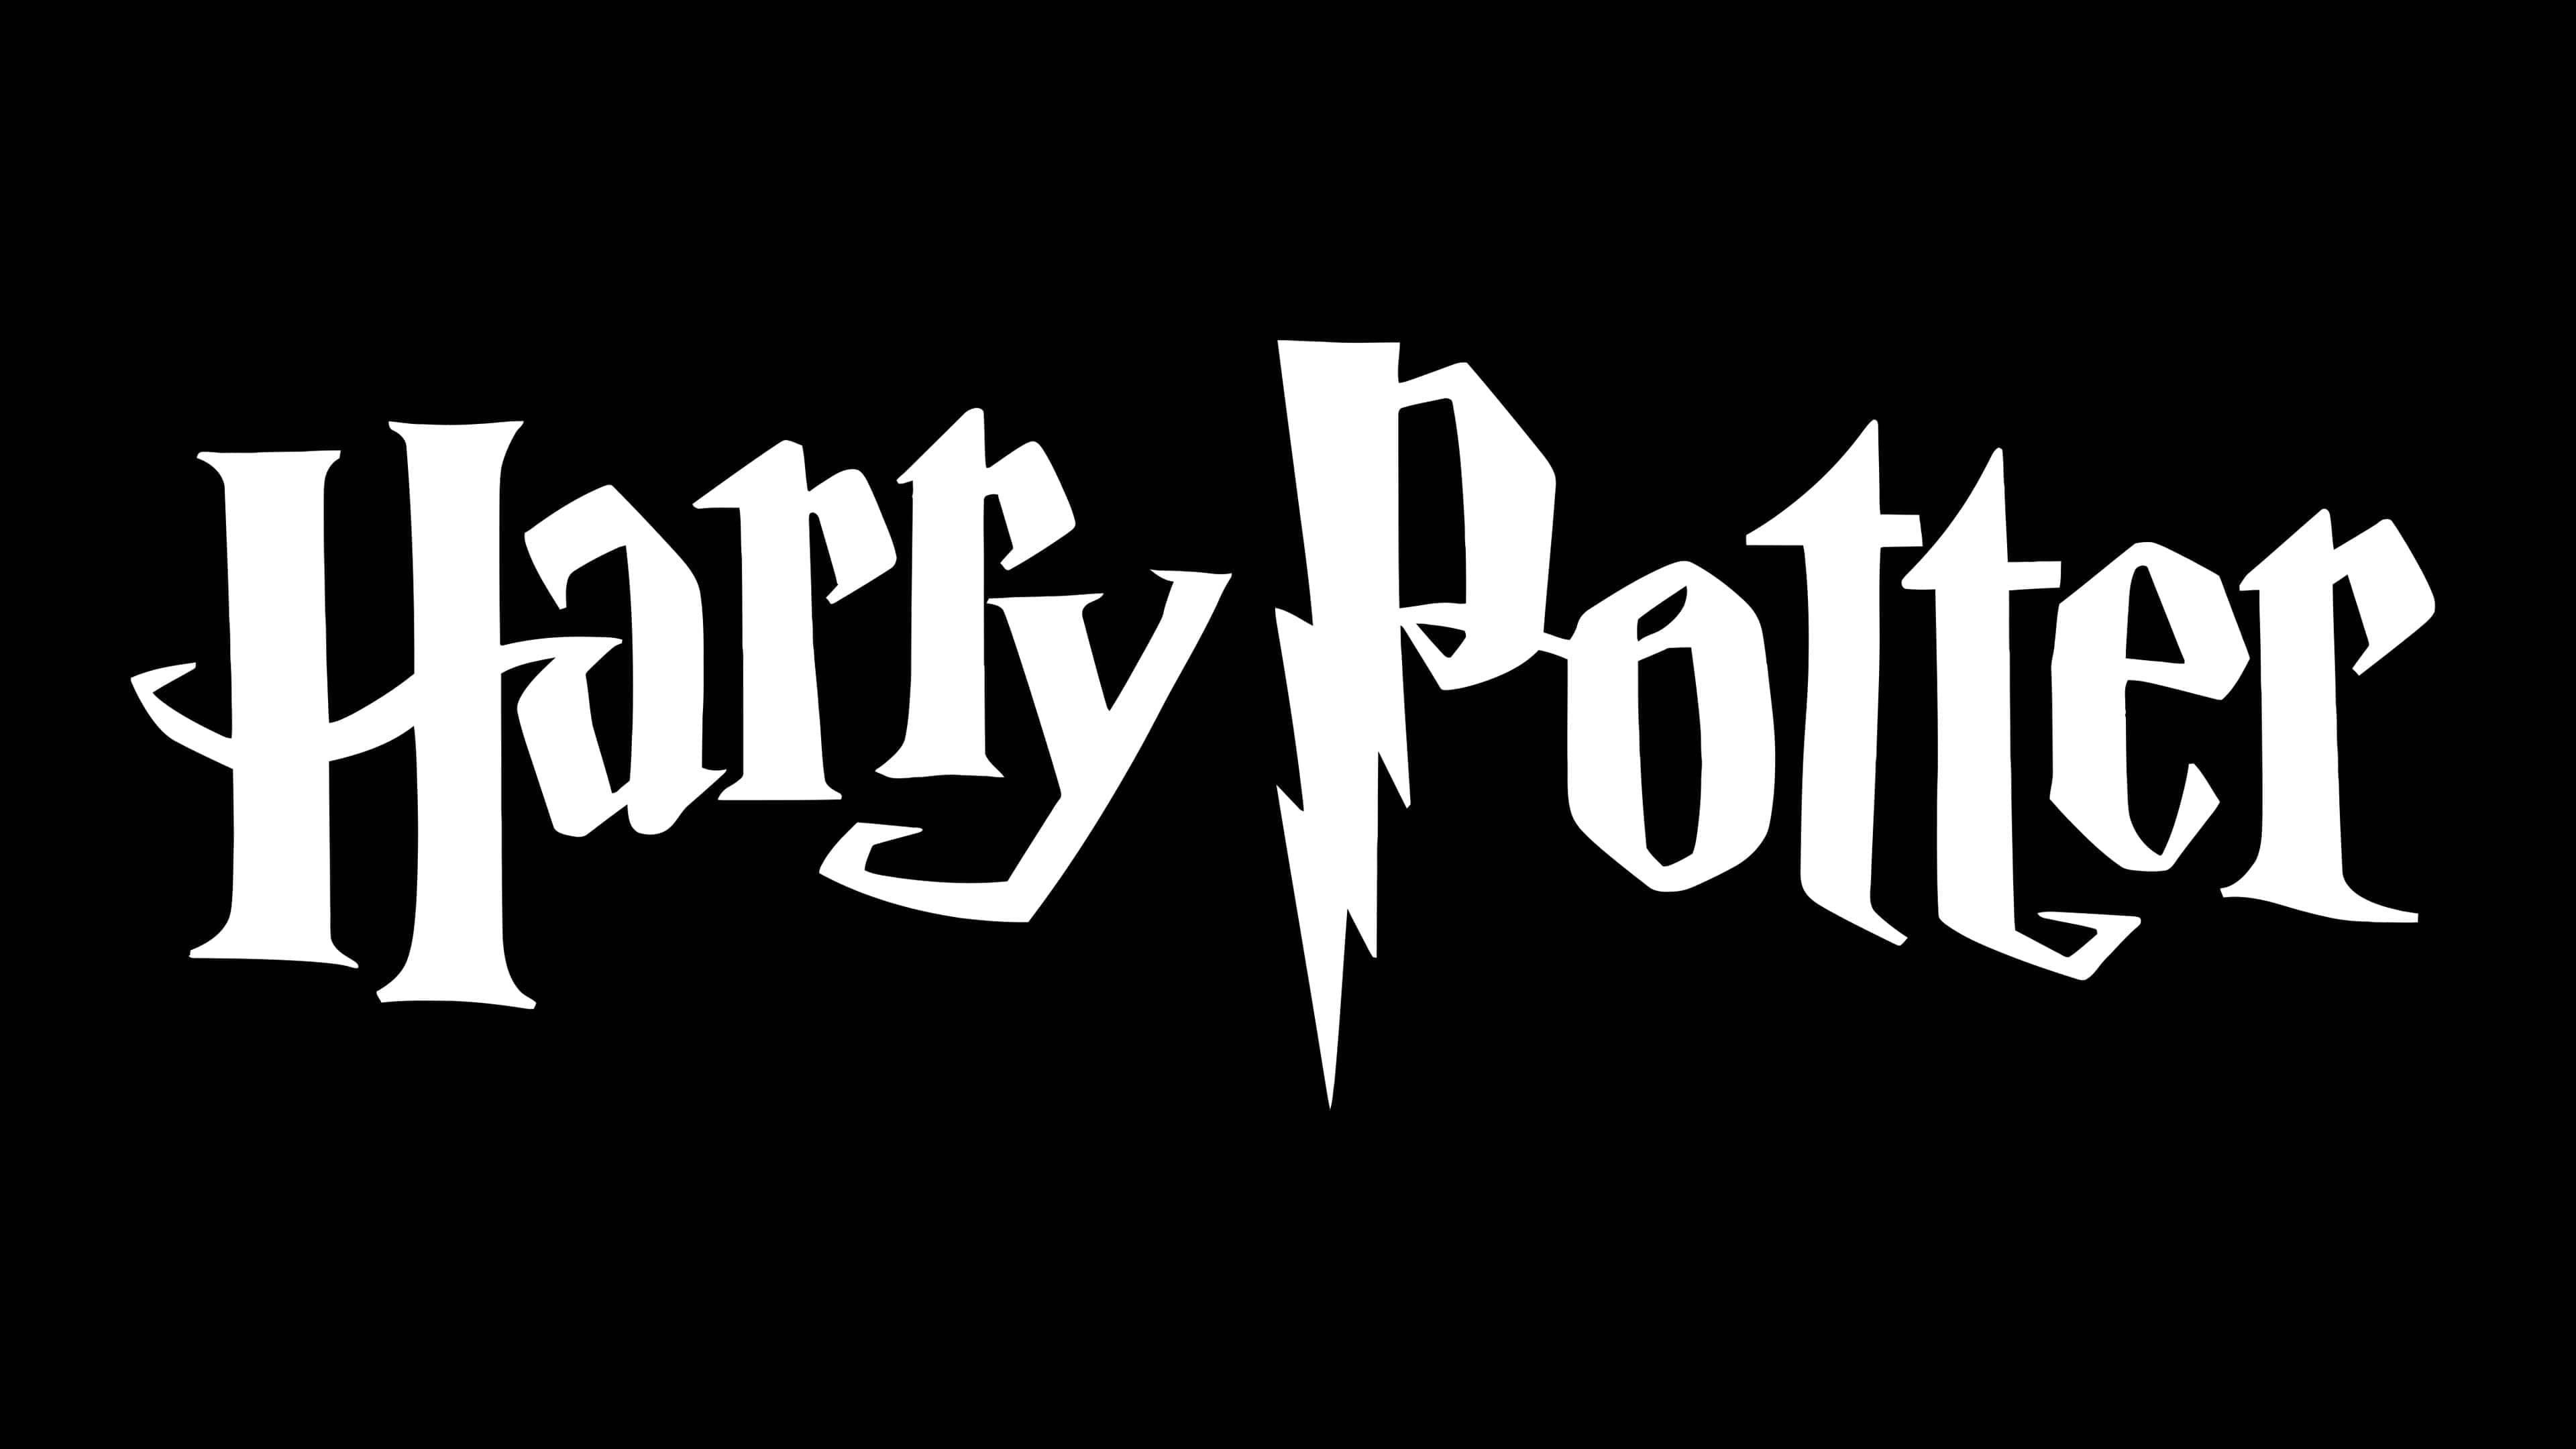 Drawing Hogwarts school logo |How to draw hogwarts logo. - YouTube